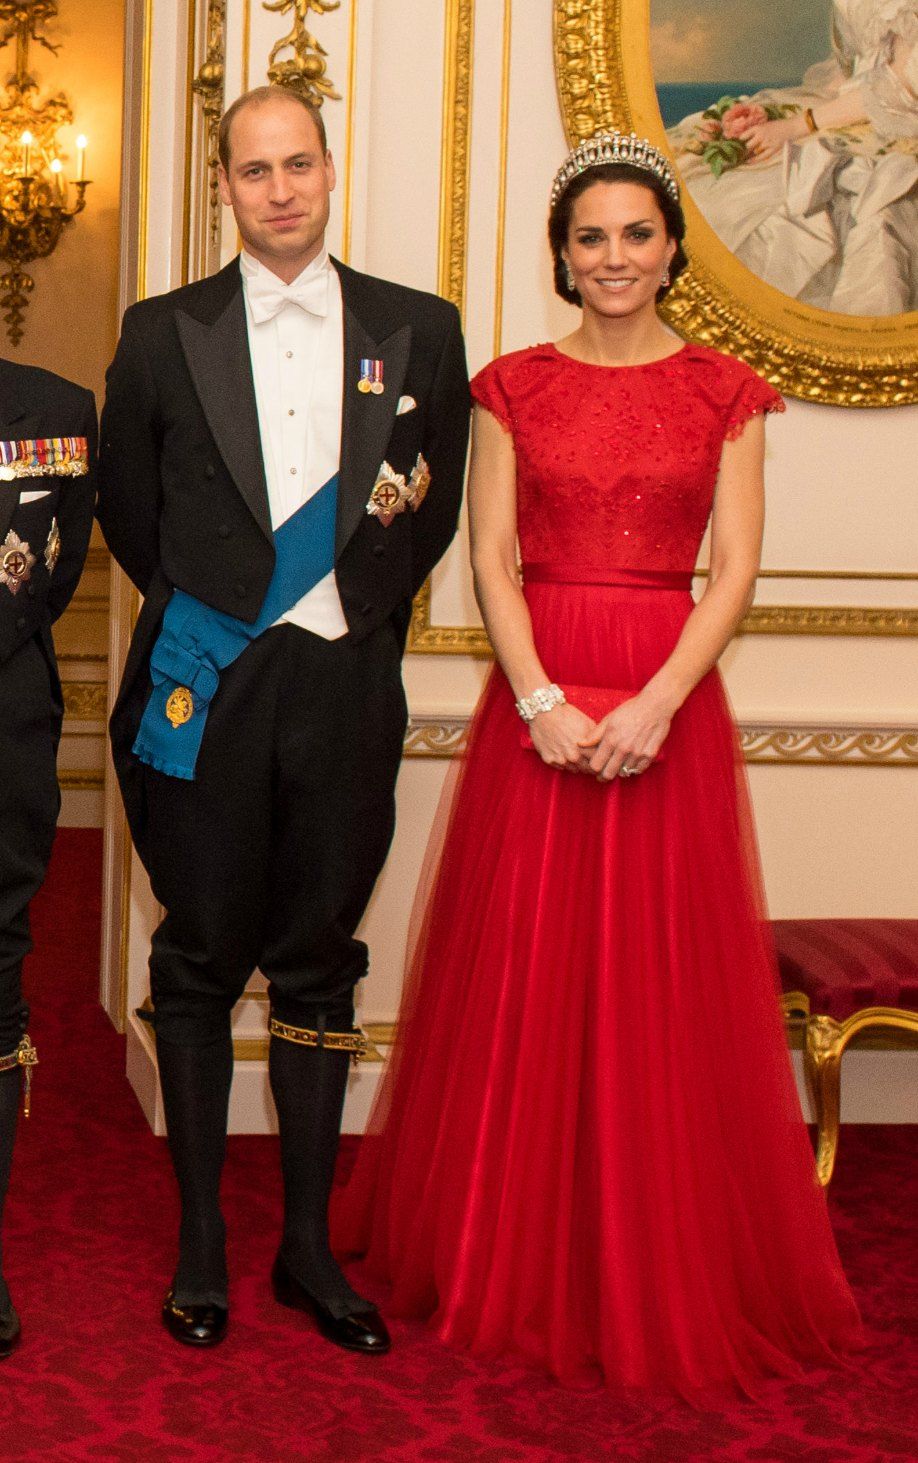 Duke and Duchess of Cambridge diplomatic reception Buckingham Palace